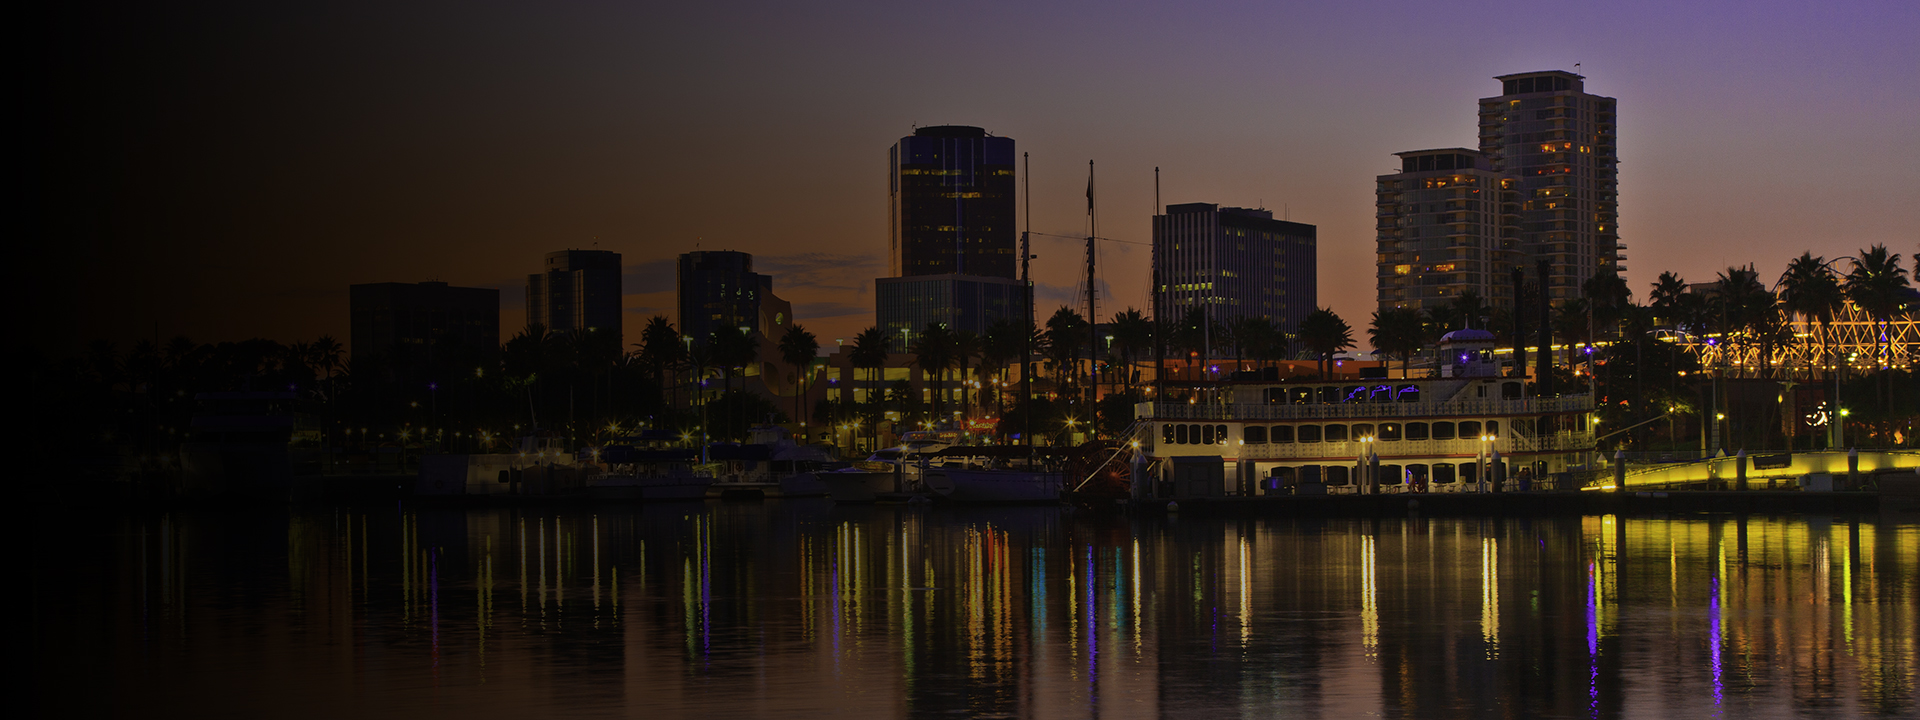 Rainbow Harbor at Long Beach Marina, California with city skyline at sunset